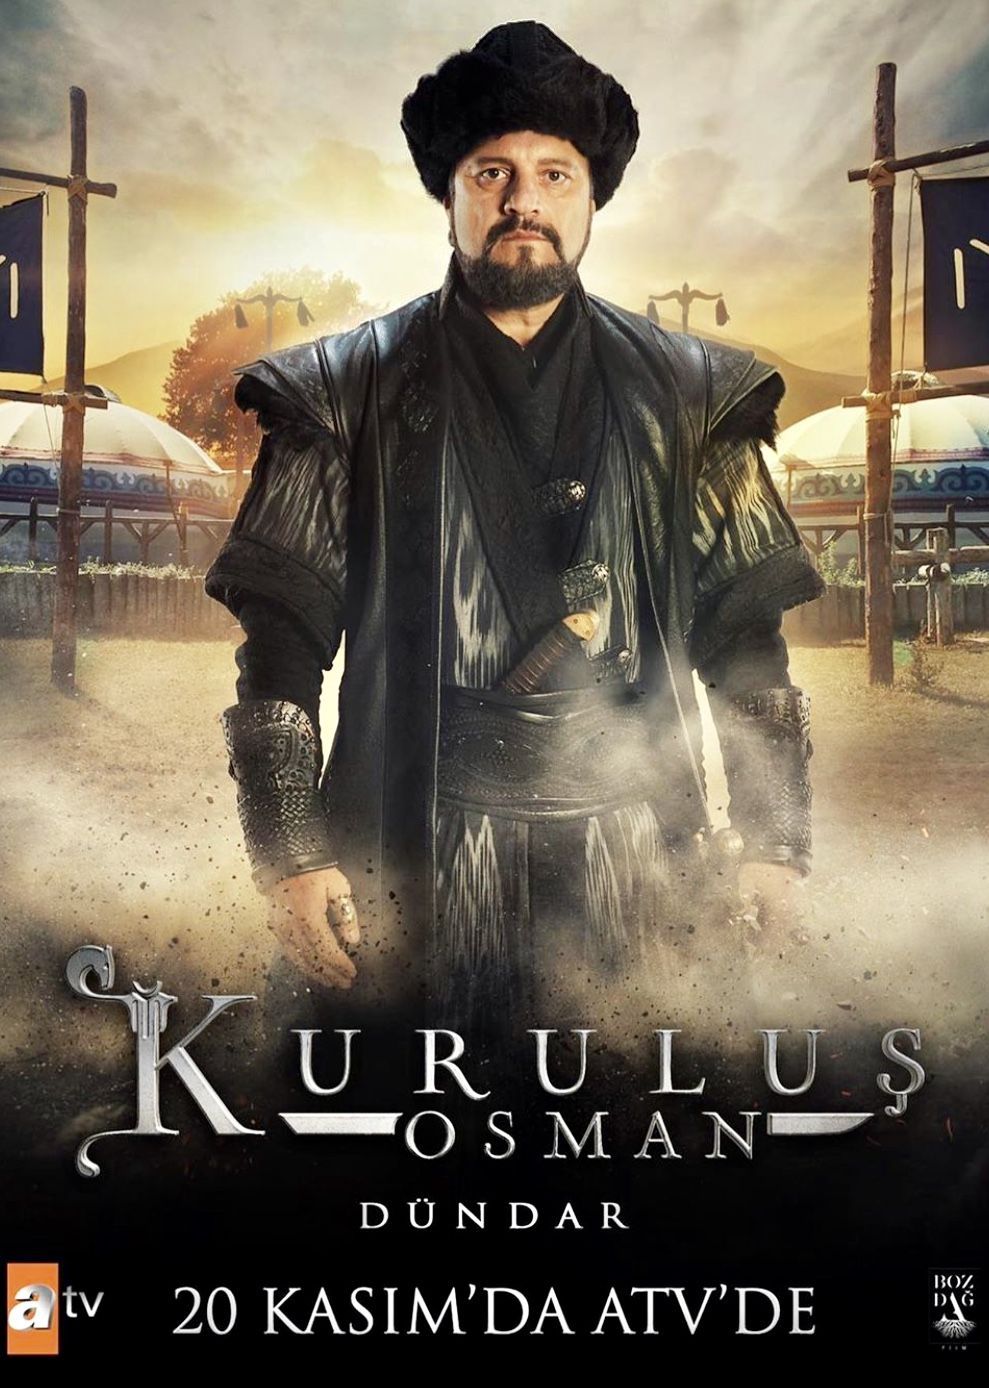 Kuruluş Osman Dündar. Full HD wallpaper, Osman, HD wallpaper